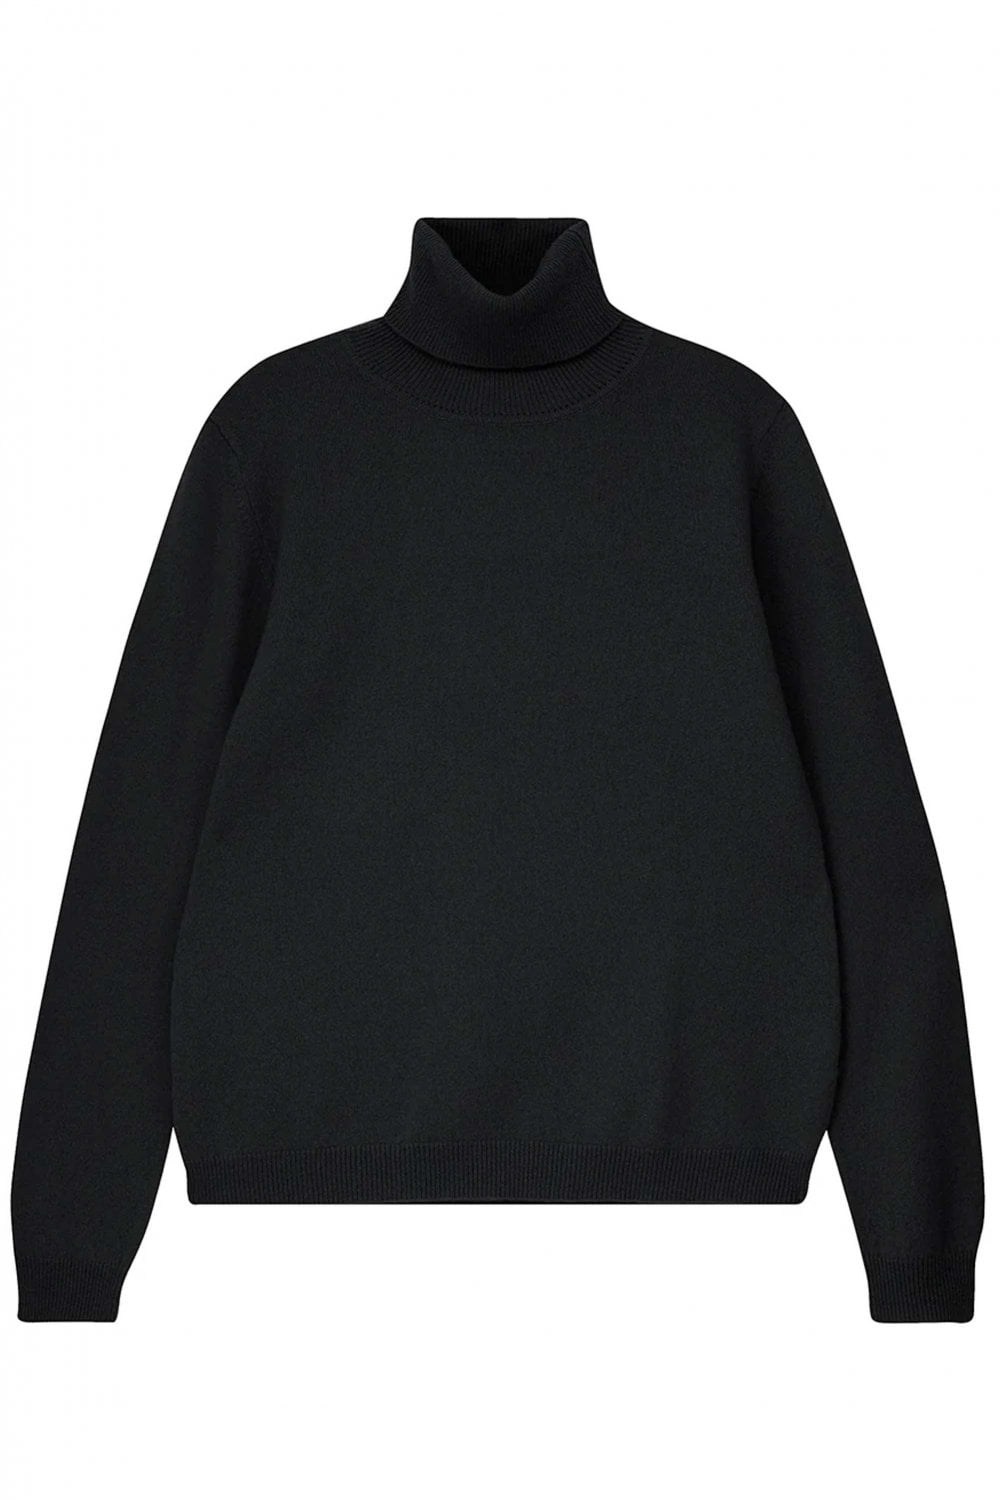 Jumper 1234 Black Cashmere Roll Collar Sweater